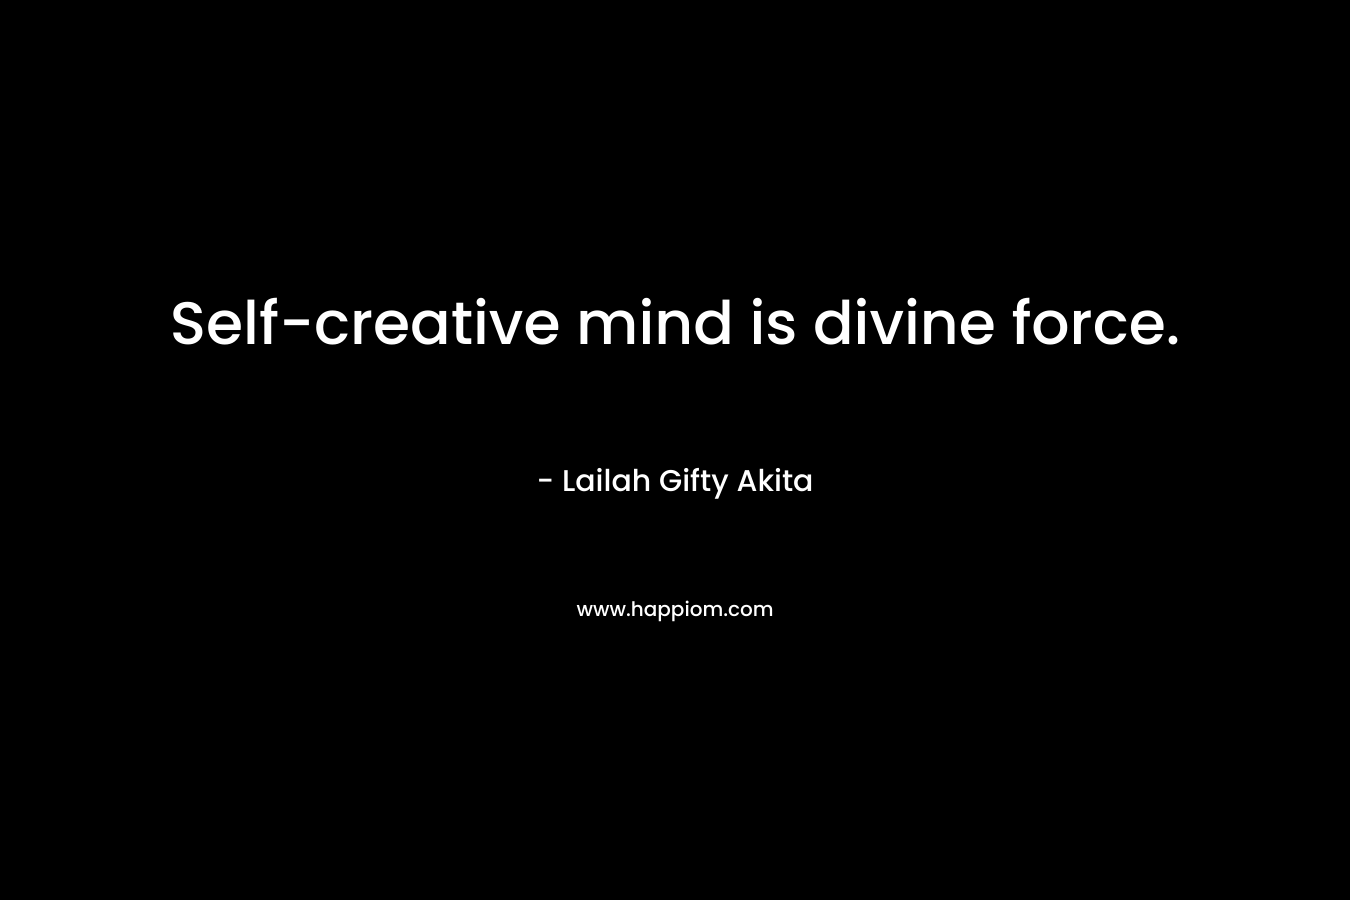 Self-creative mind is divine force.